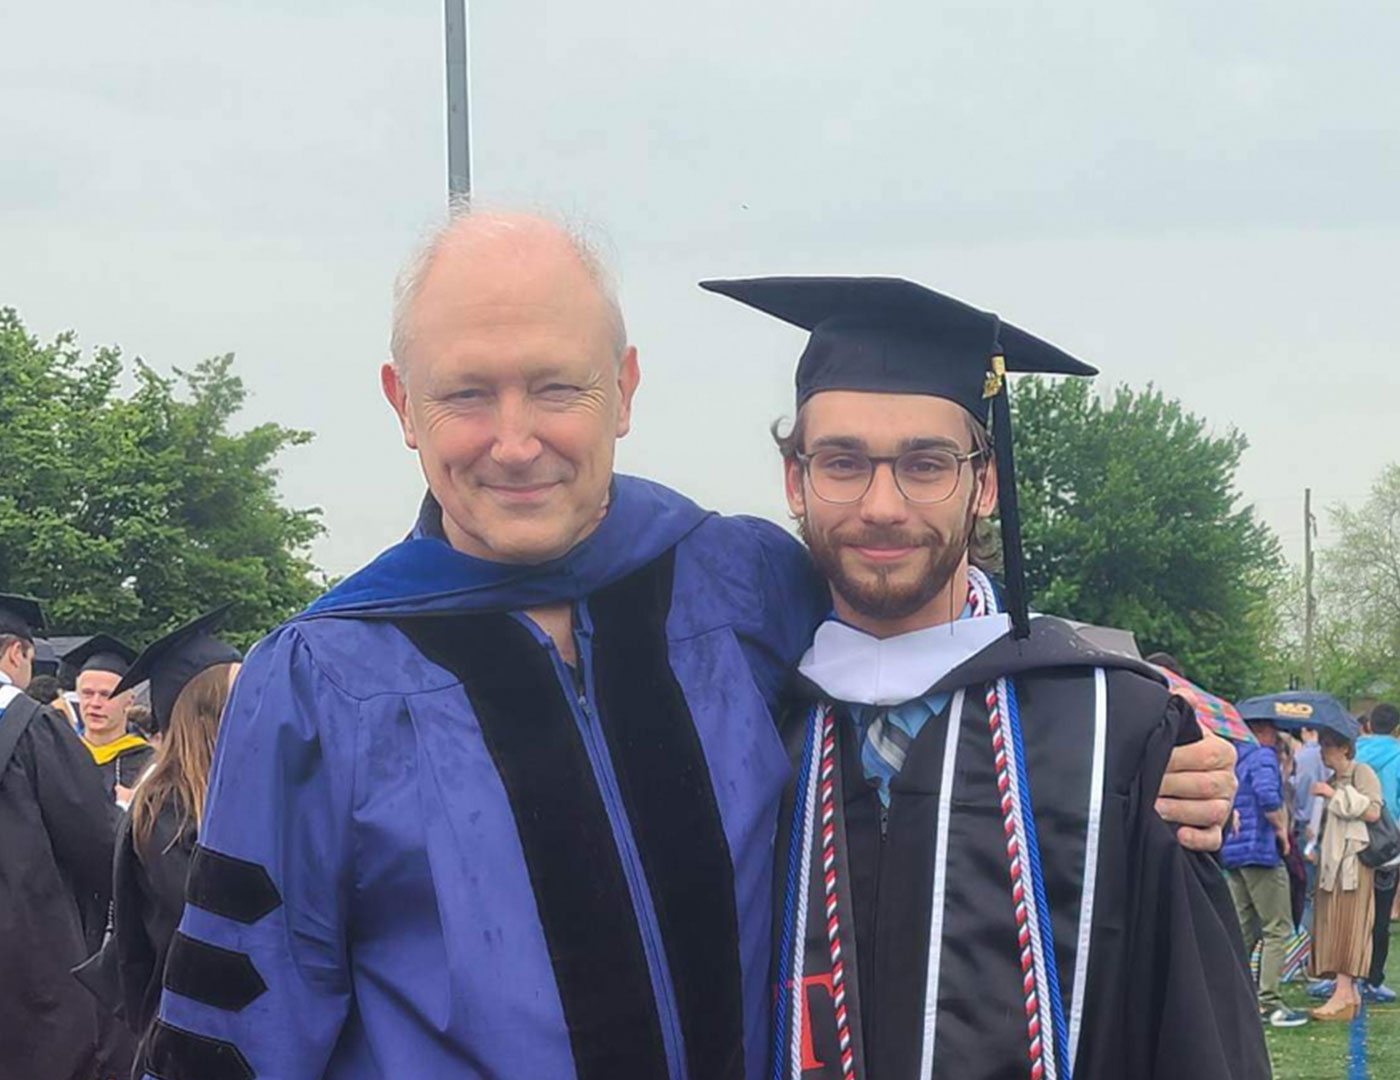 Political science graduate Matthew Davis poses with Dr. Philip Benesch